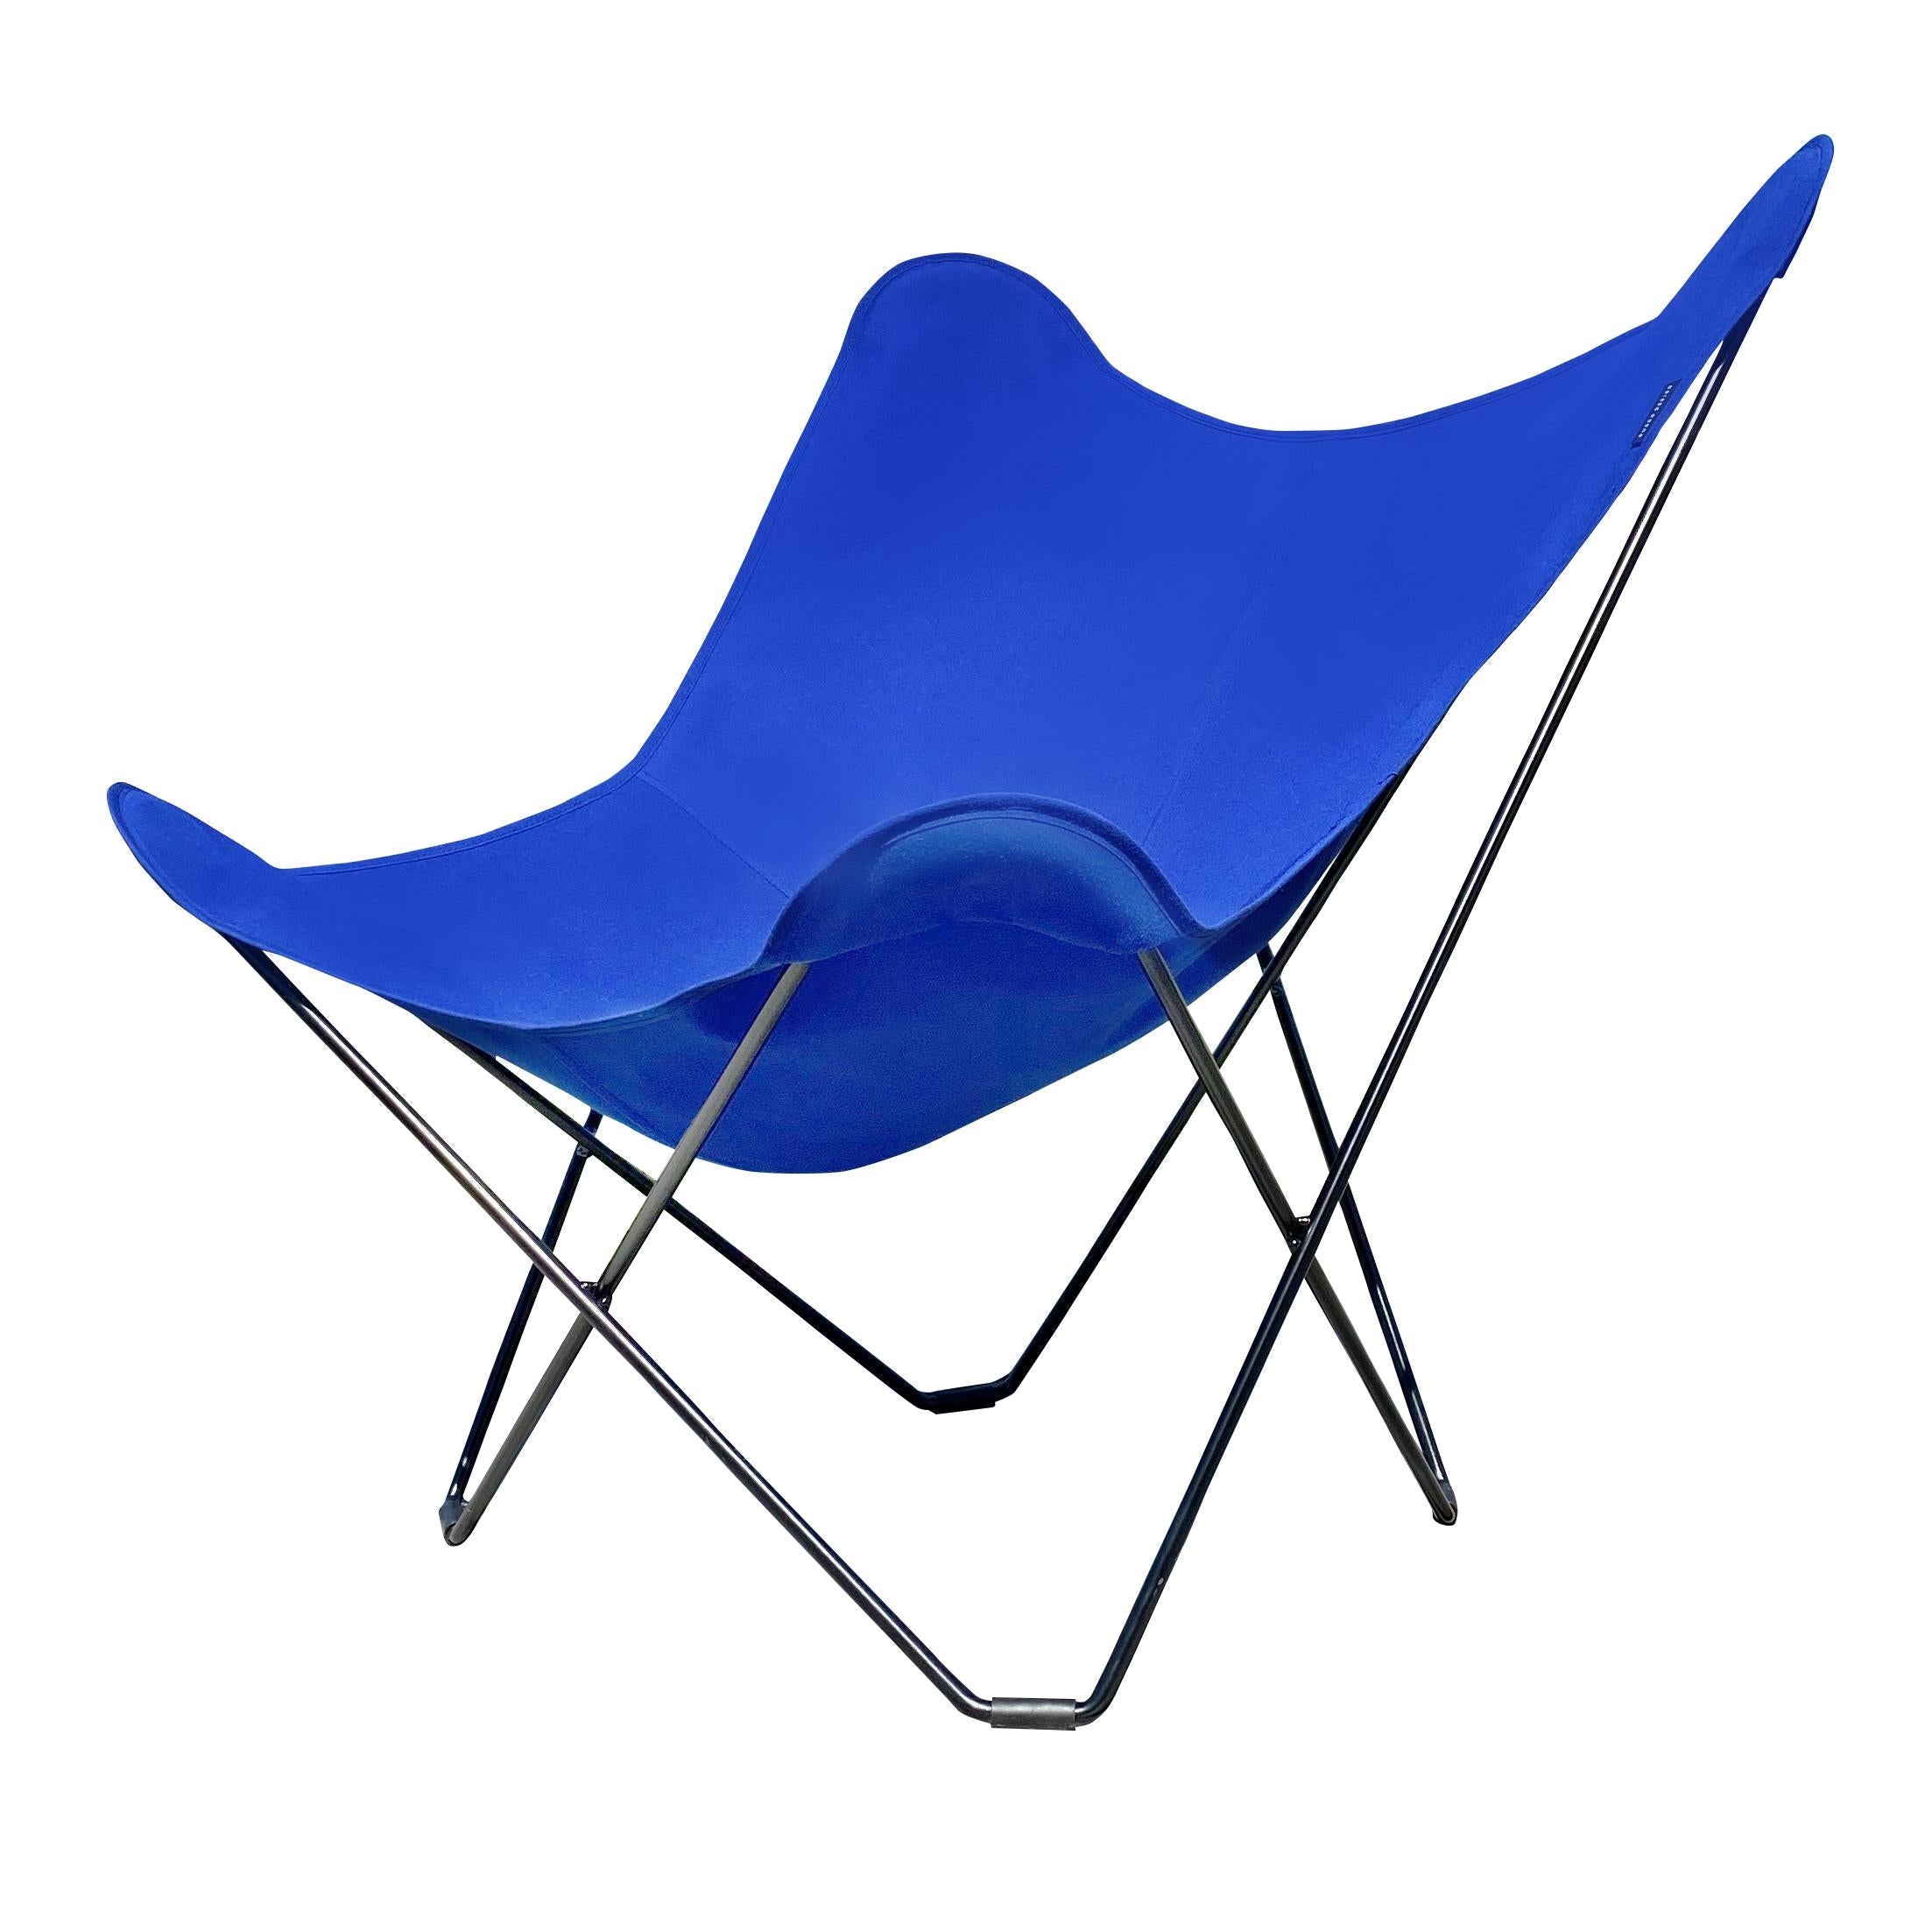 Cuero Sunshine Mariposa Butterfly Chair, Atlantic Blue/Black